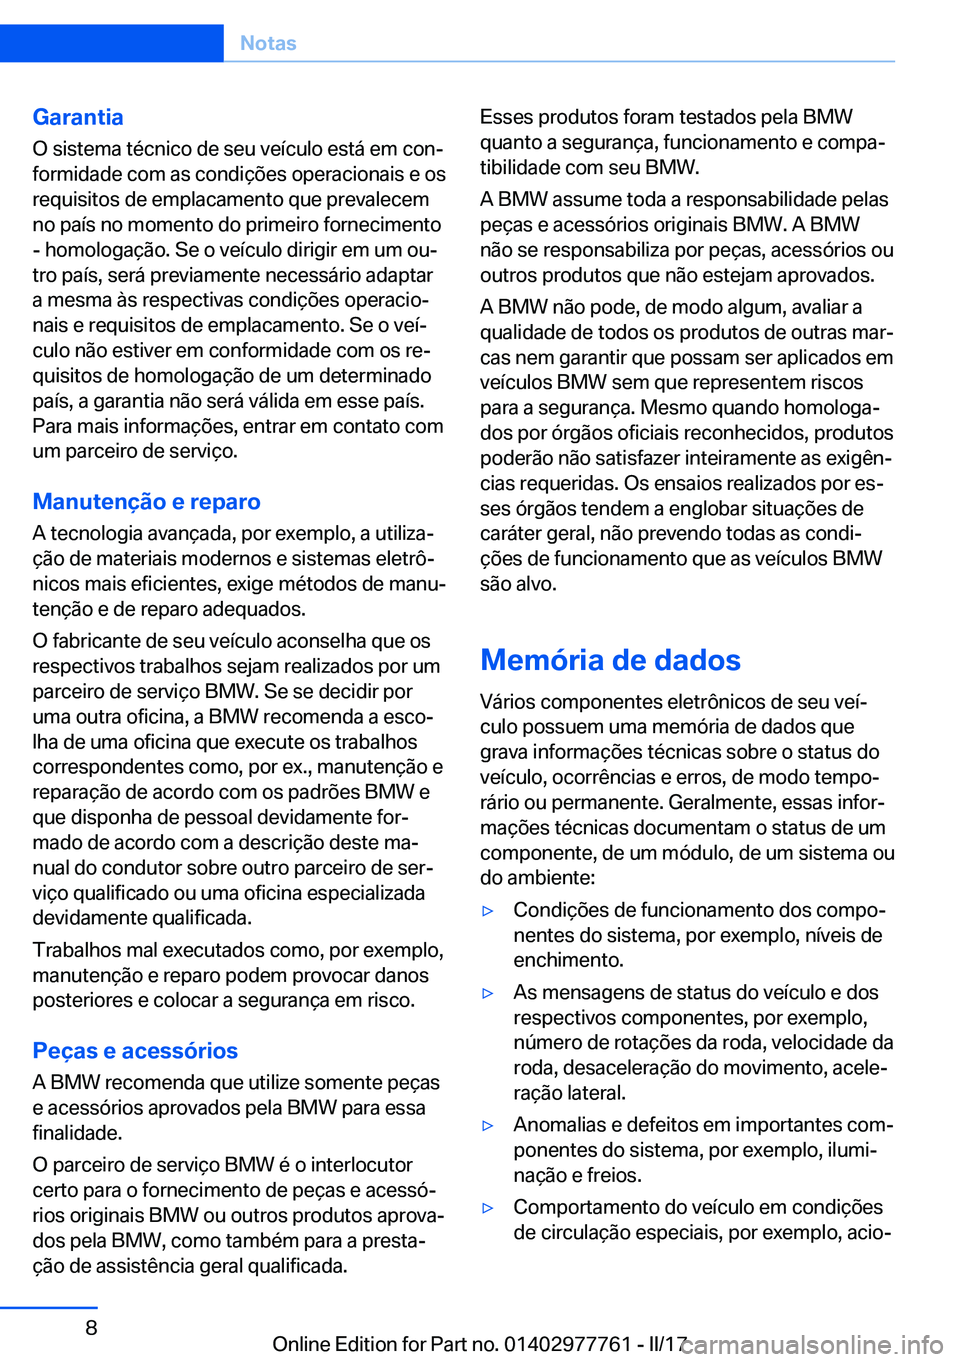 BMW 2 SERIES COUPE 2017  Manual do condutor (in Portuguese) �G�a�r�a�n�t�i�a�O� �s�i�s�t�e�m�a� �t�é�c�n�i�c�o� �d�e� �s�e�u� �v�e�